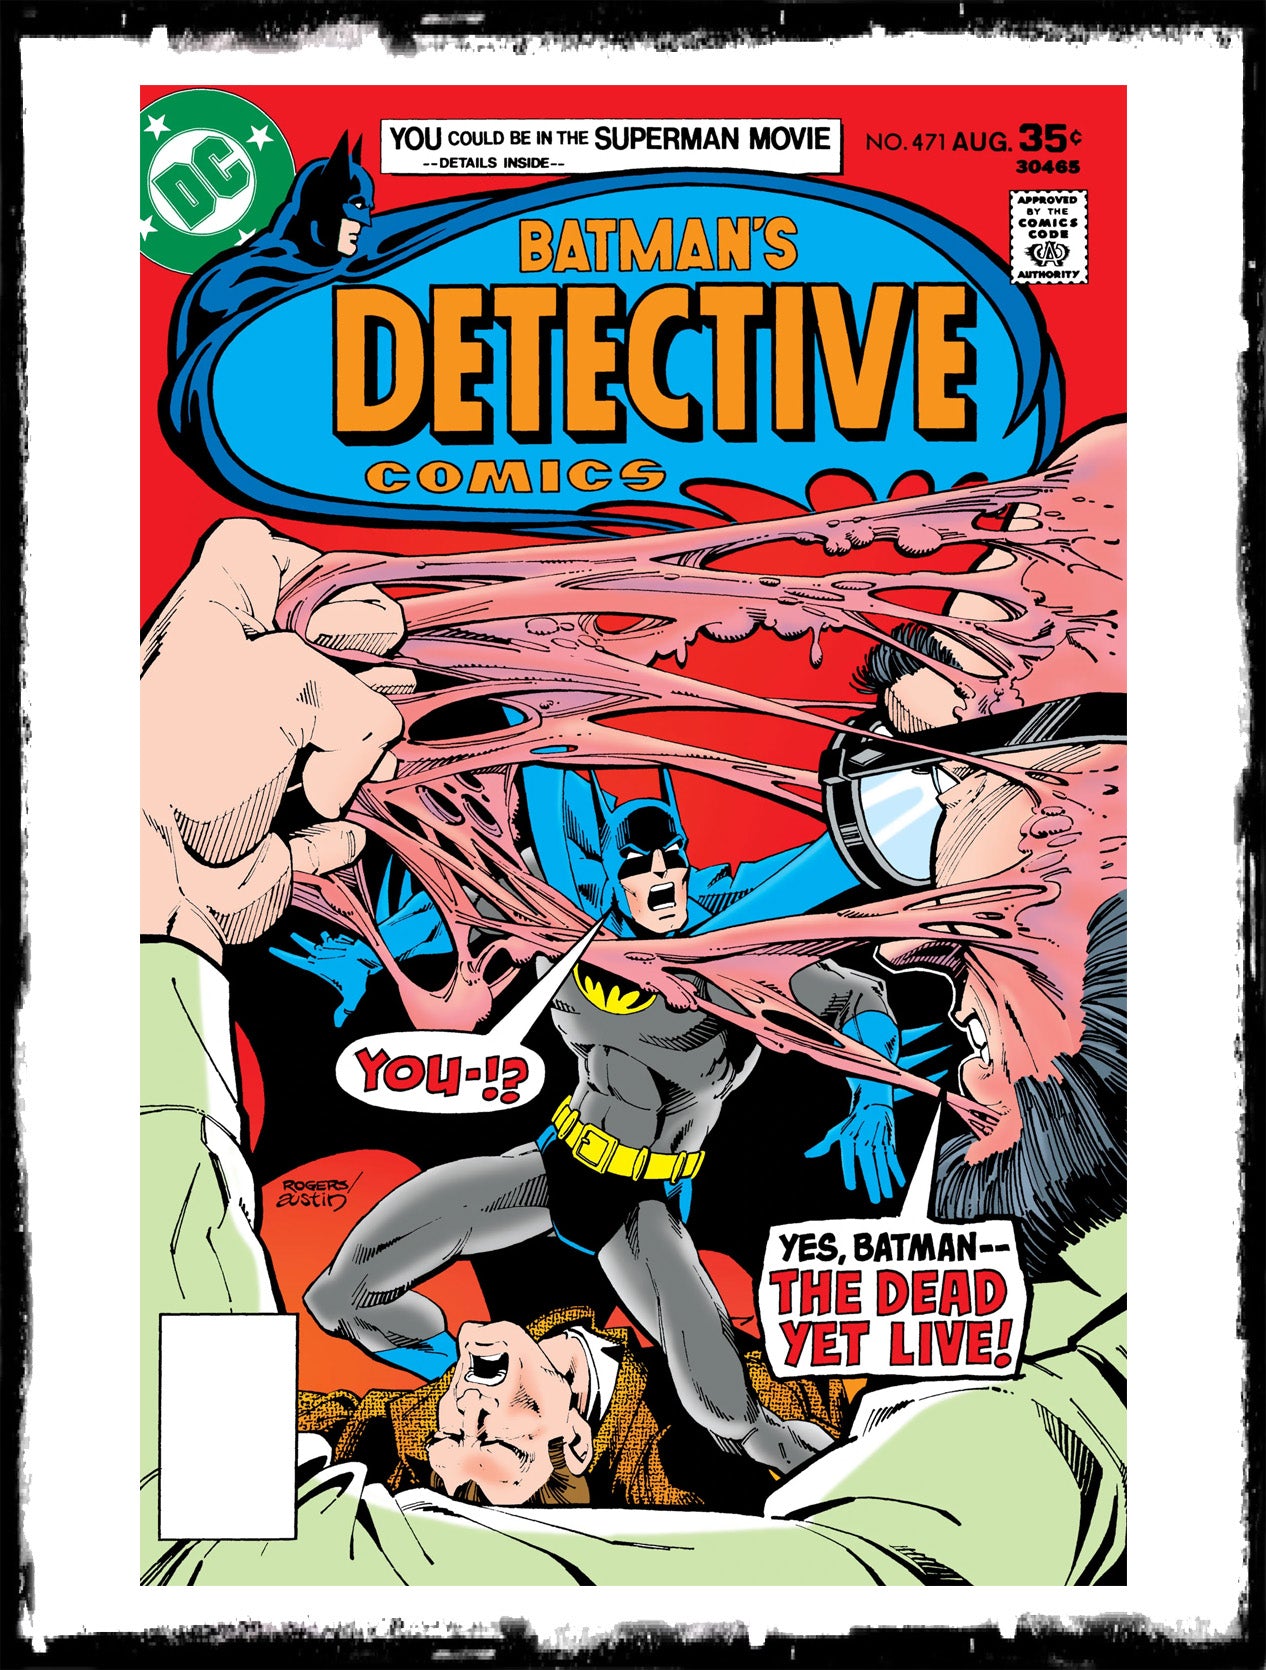 DETECTIVE COMICS - #471 DR. HUGO STRANGE! (1977 - VF+/NM)